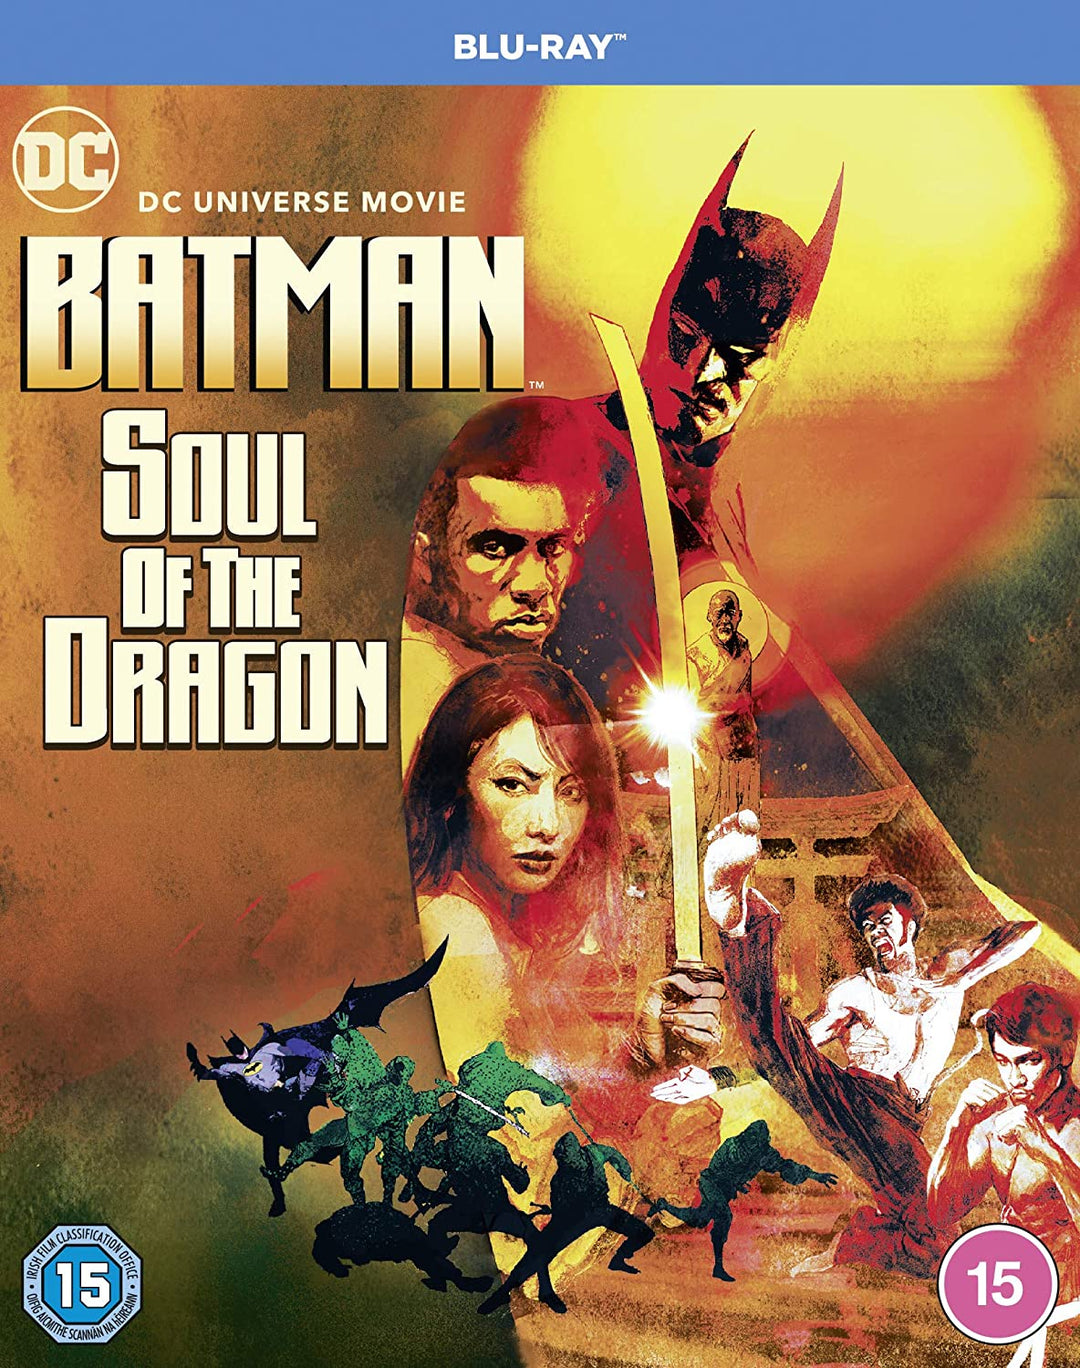 Batman: Soul of the Dragon [2021] [Region Free] - [Blu-ray]